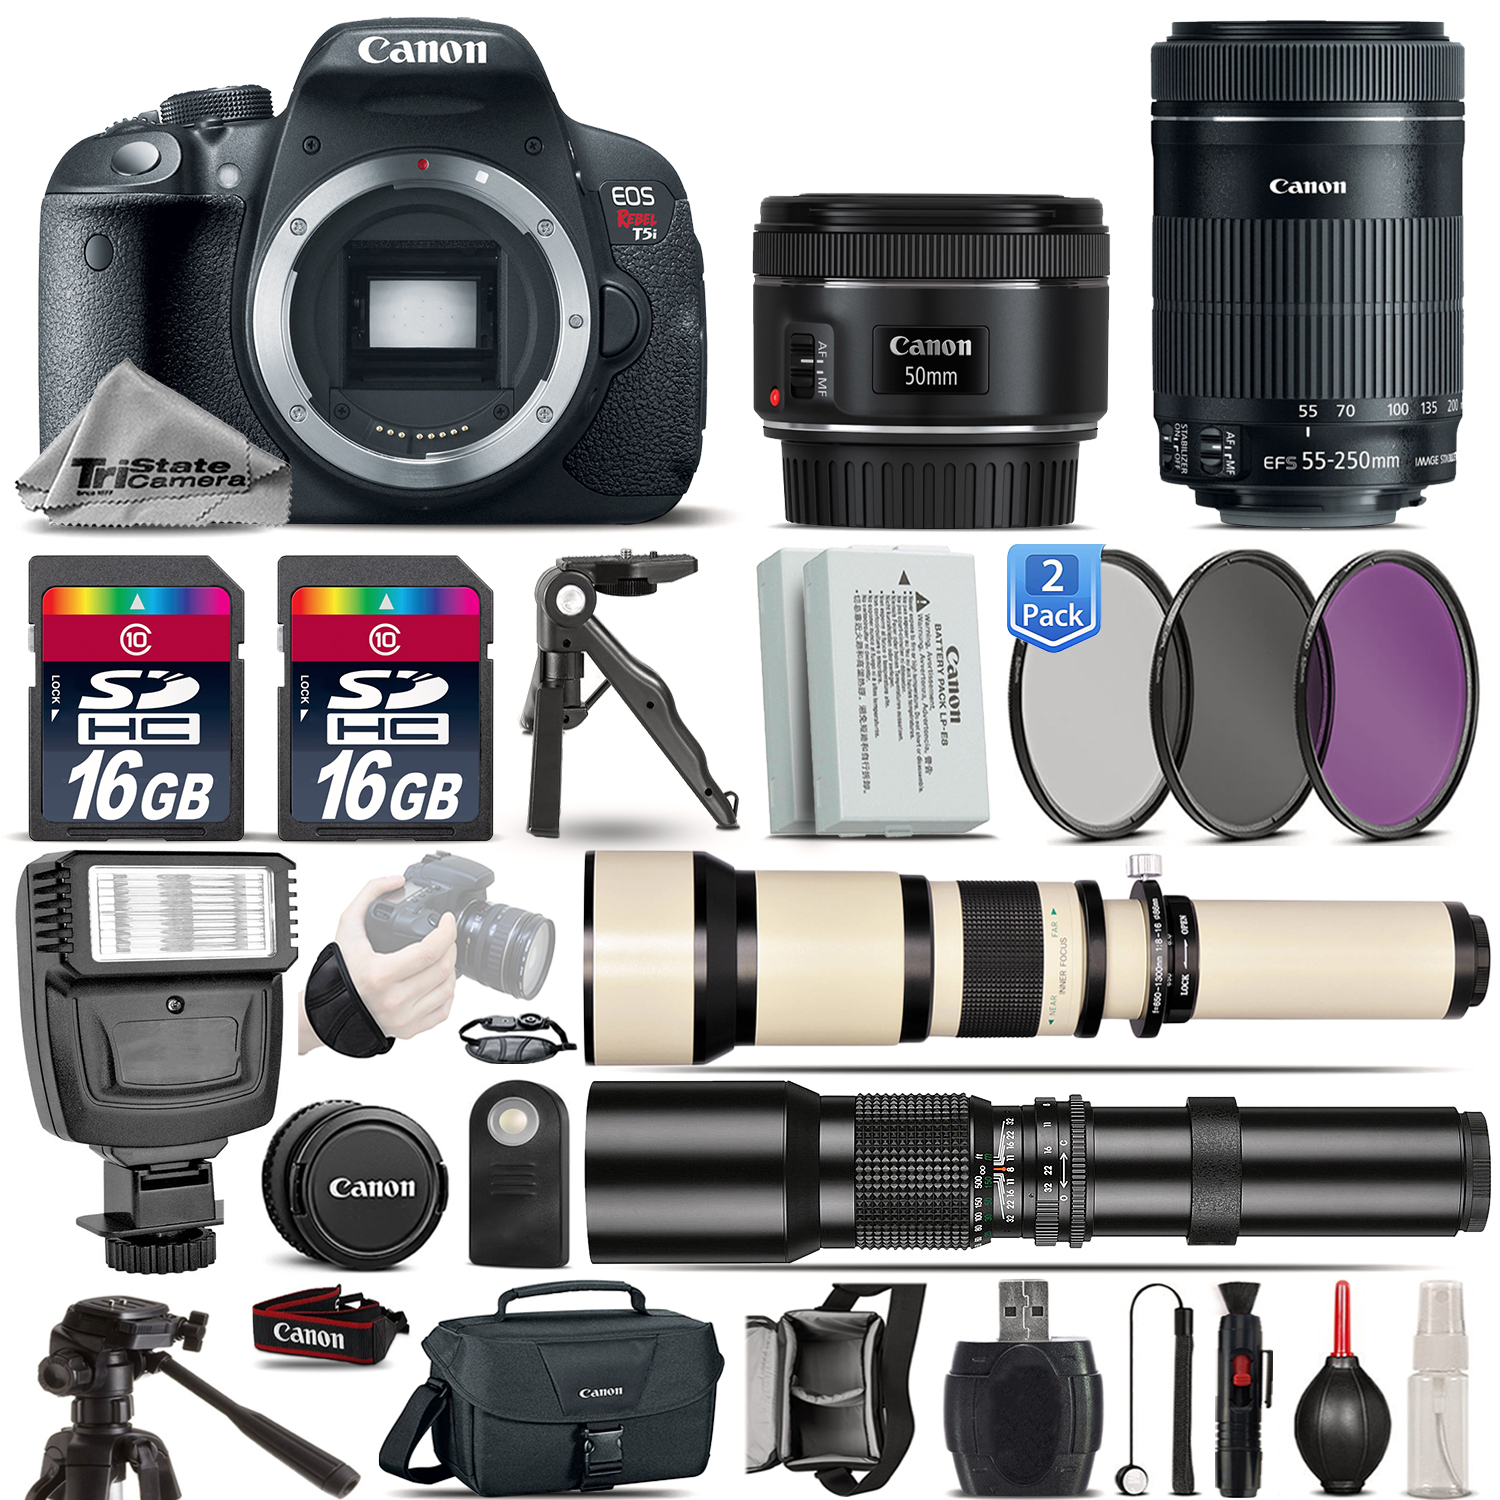 EOS Rebel T5i 700D Camera + 50mm 1.8 + 55-250mm STM + EXT BATT - 32GB Kit *FREE SHIPPING*